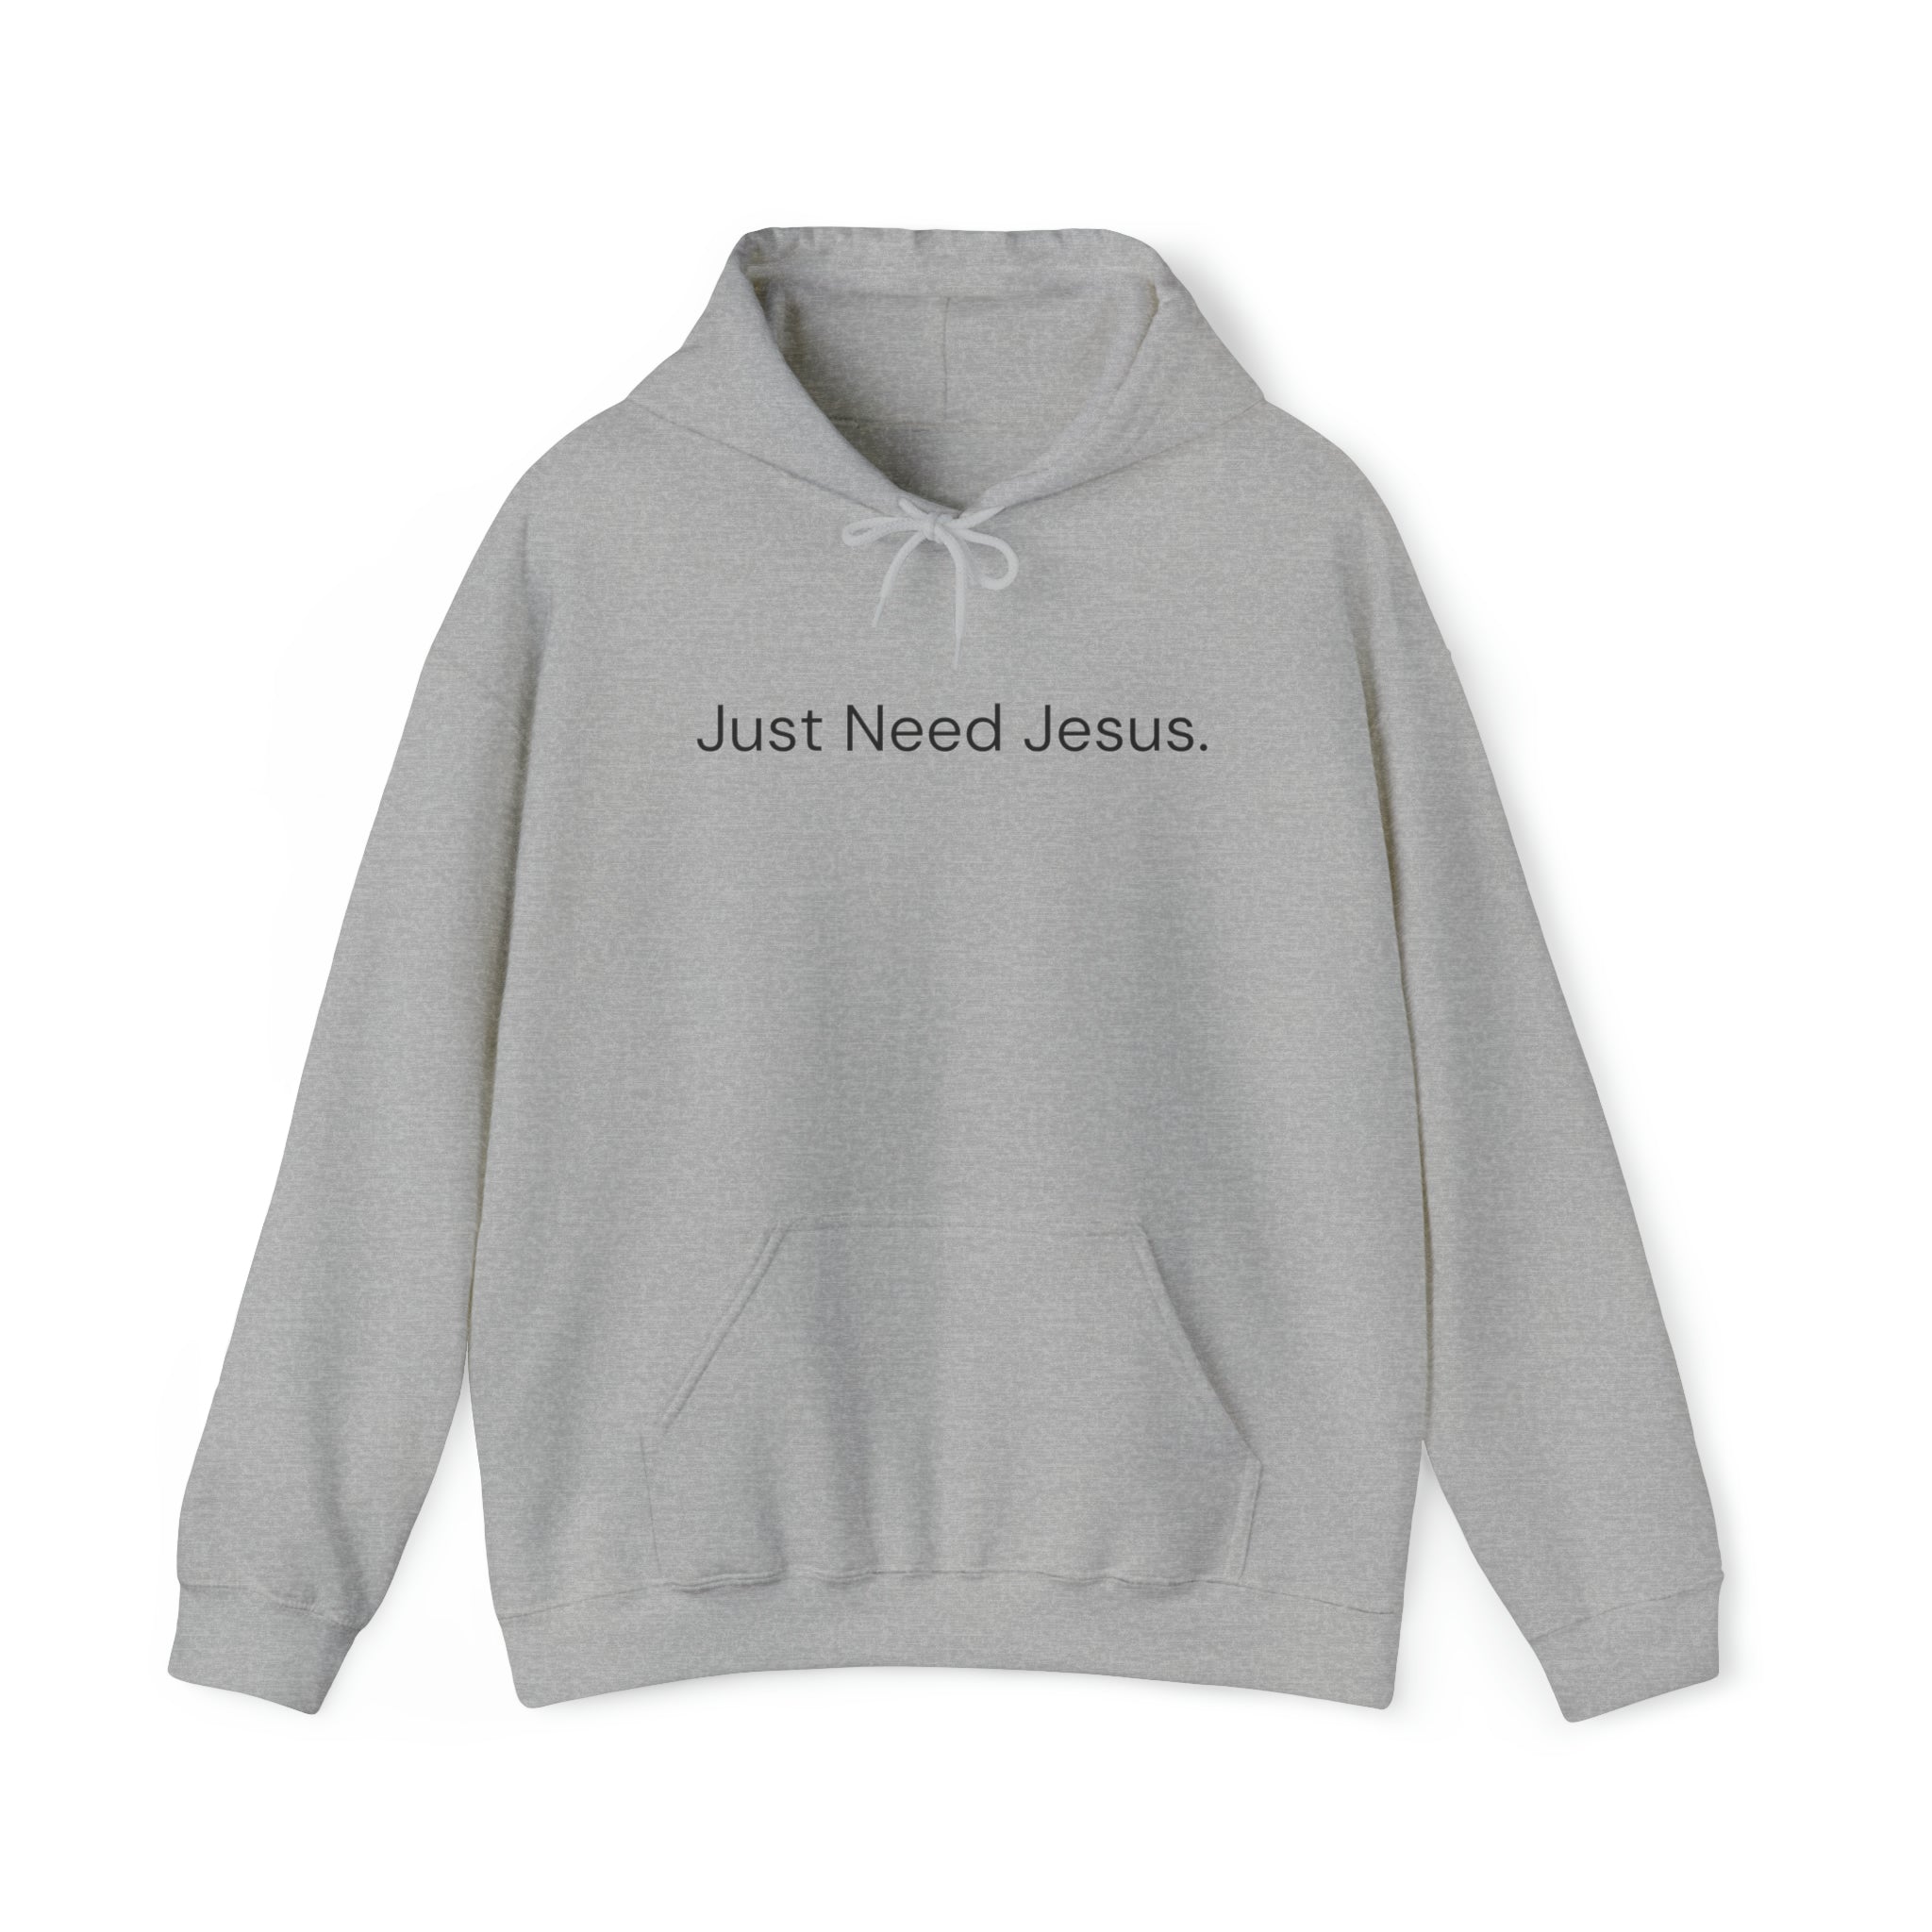 Just Need Jesus. Hoodie (Unisex)